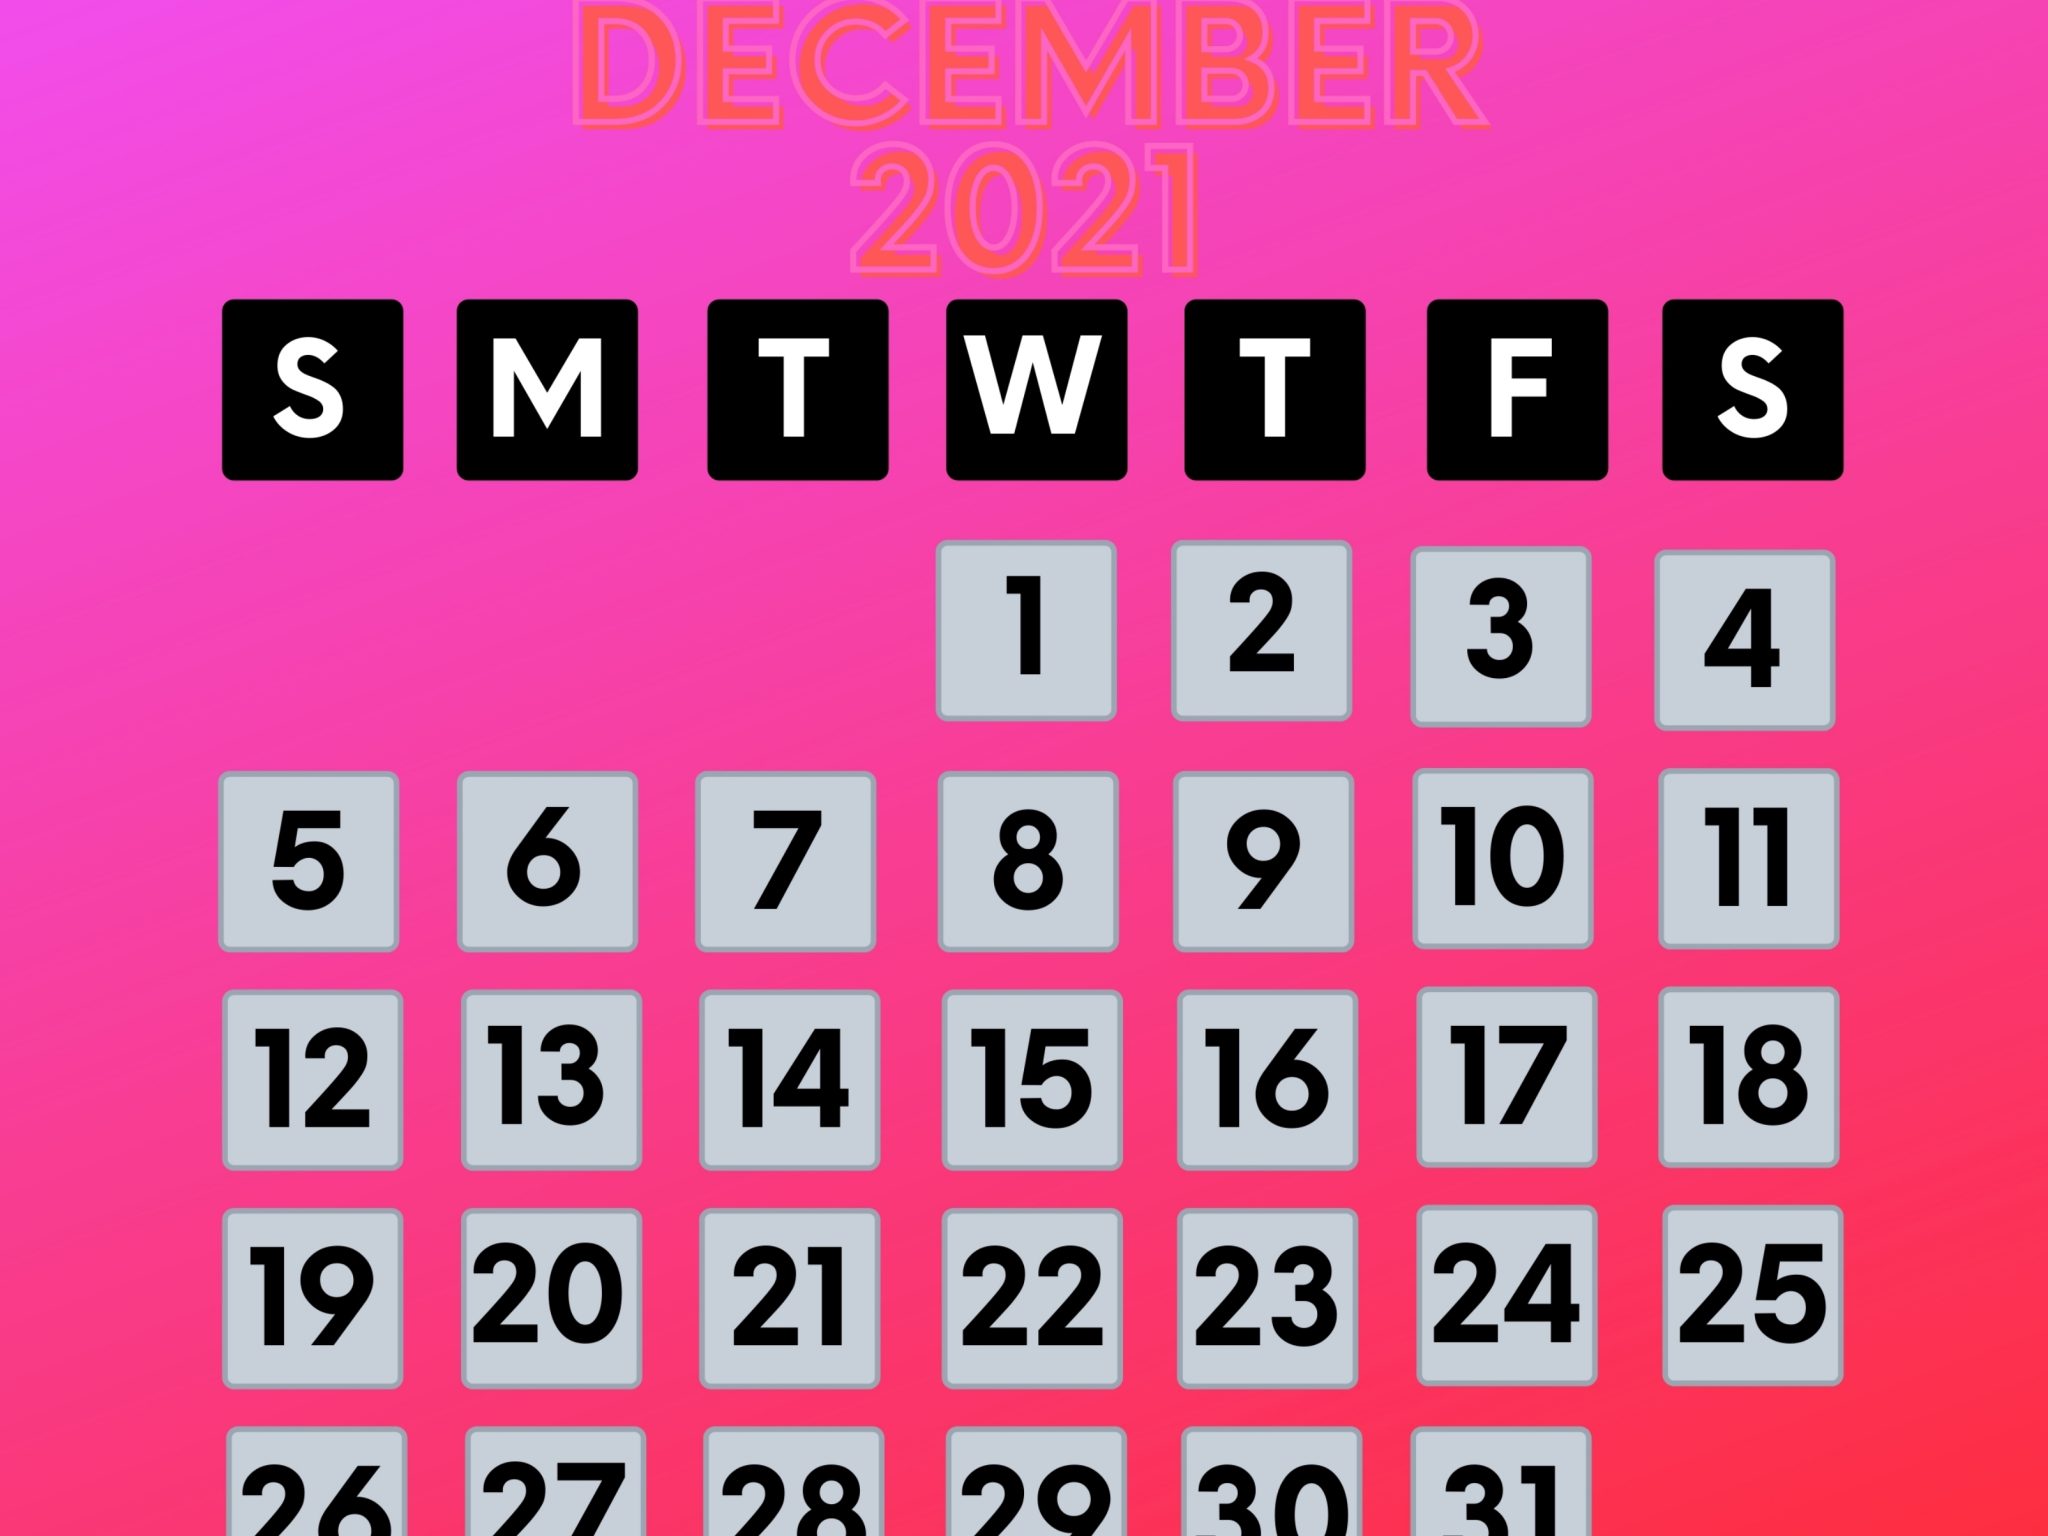 2048x1536 wallpaper December 2021 Calendar iPad Wallpaper 2048x1536 pixels resolution